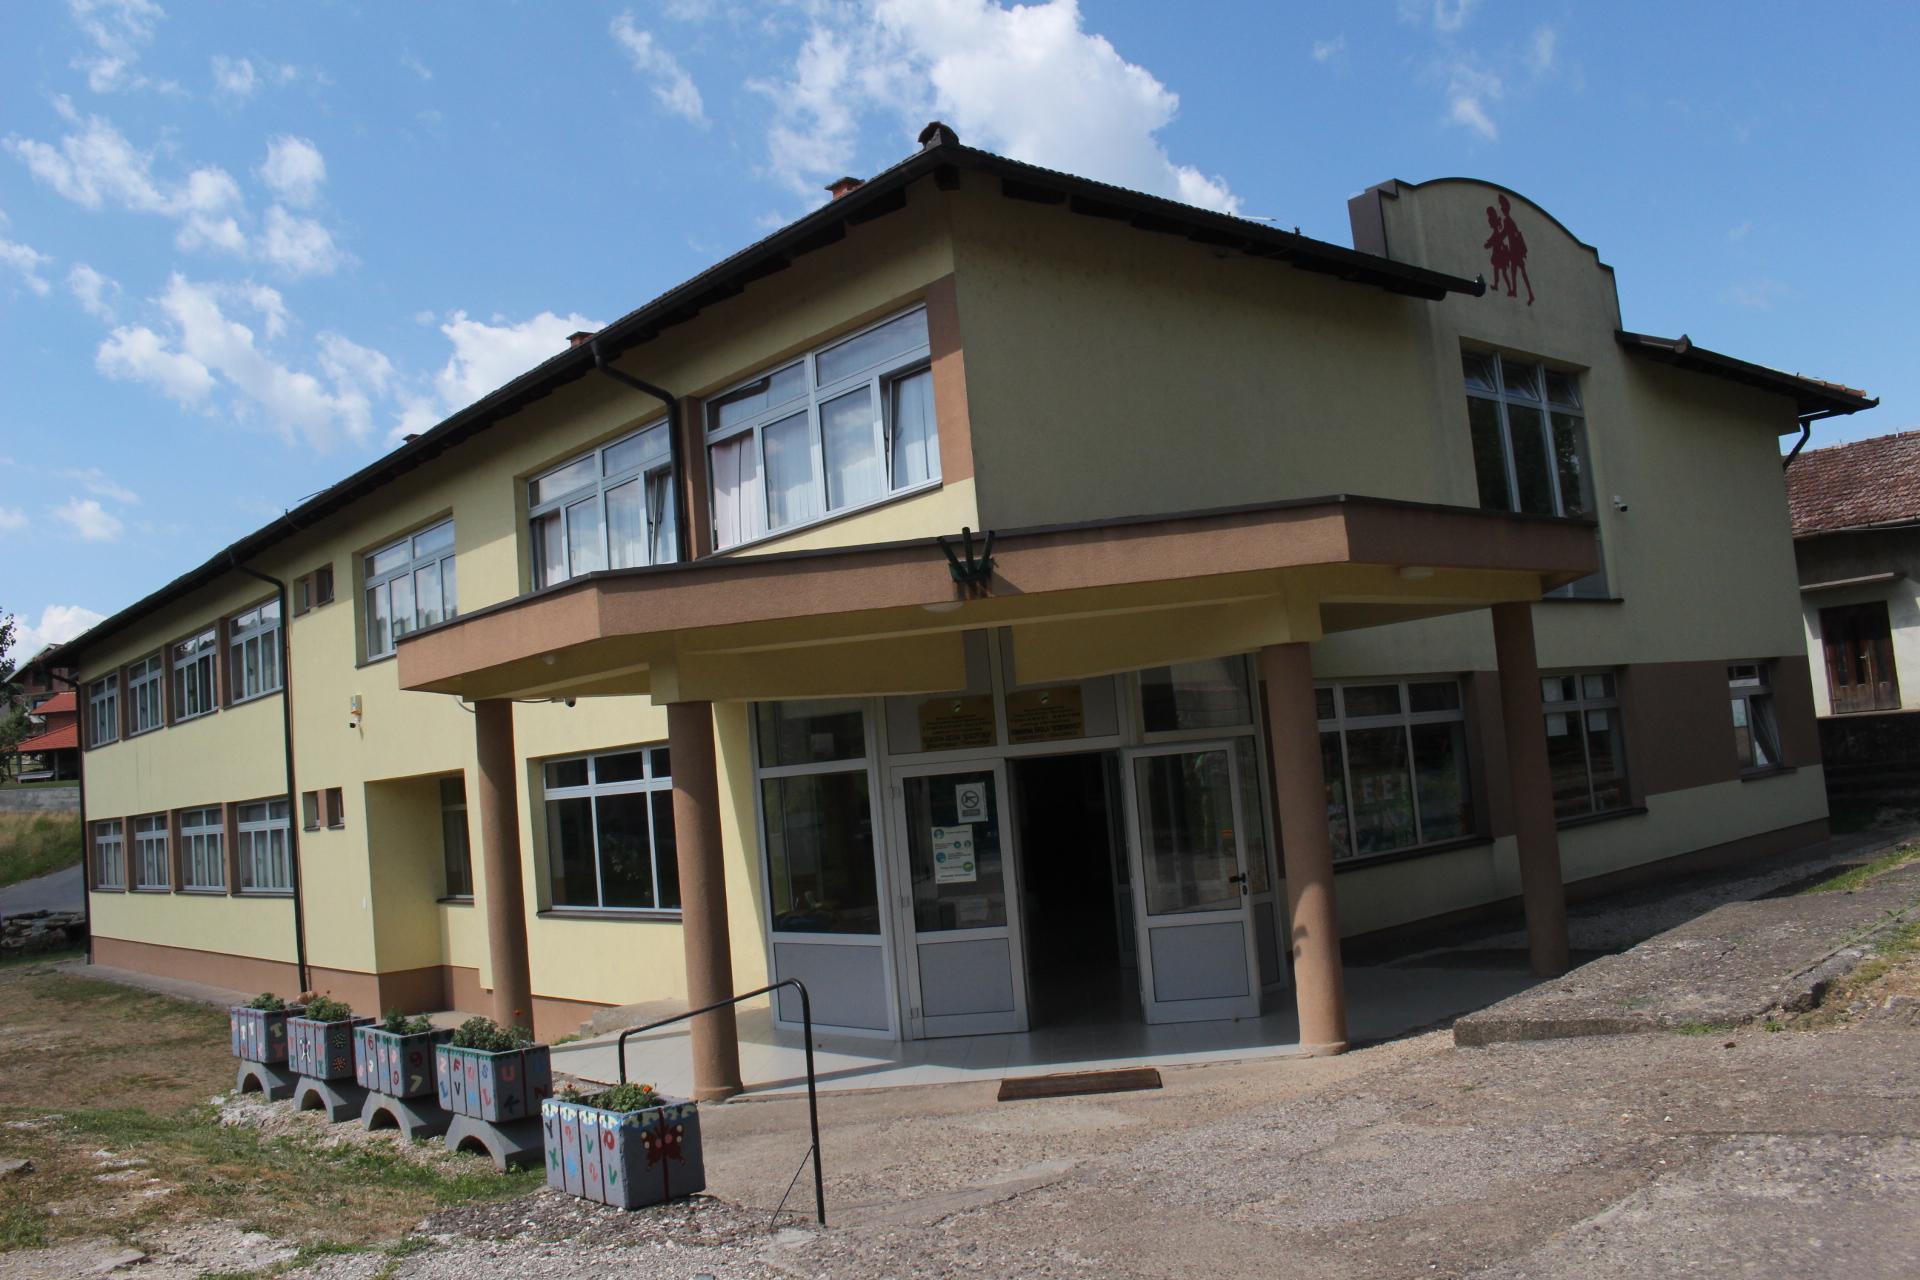 Osnovna škola „Doborovci“: Administrativni problemi - Avaz